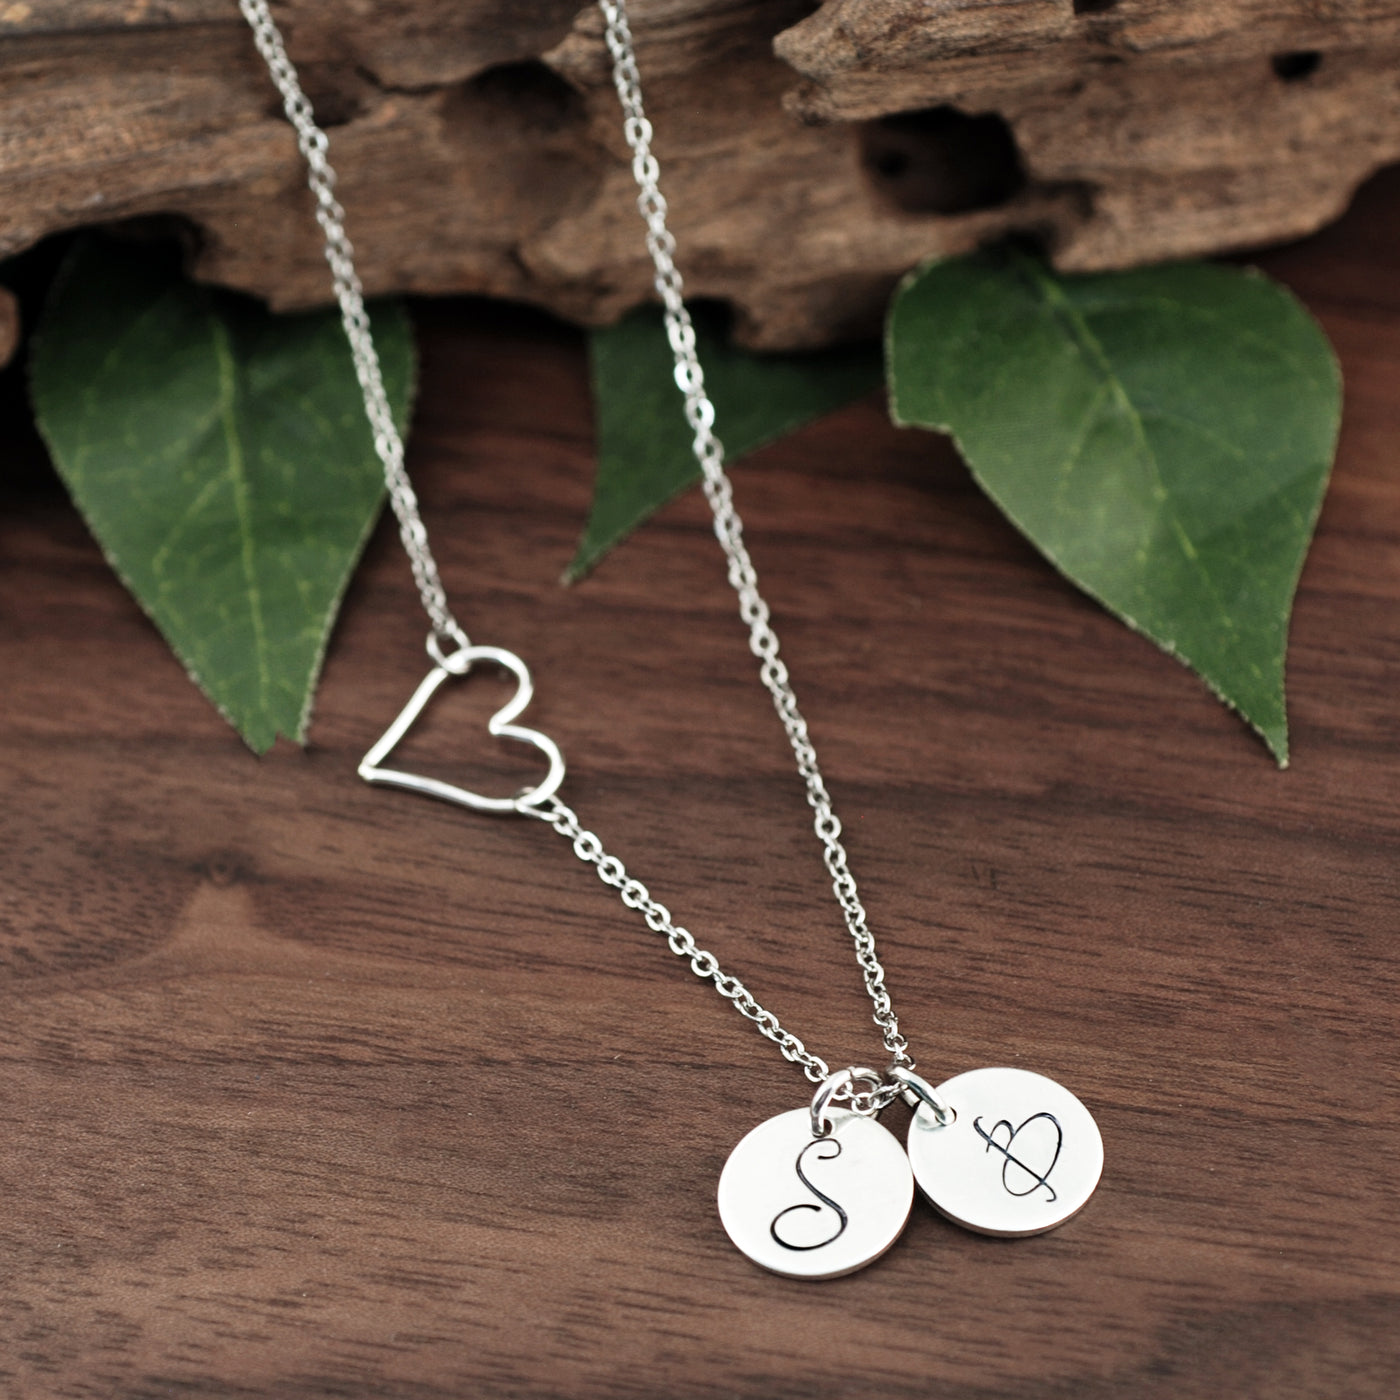 Sideways Heart Rainbow CZ Necklace in Sterling Silver - The Jewelry Vine